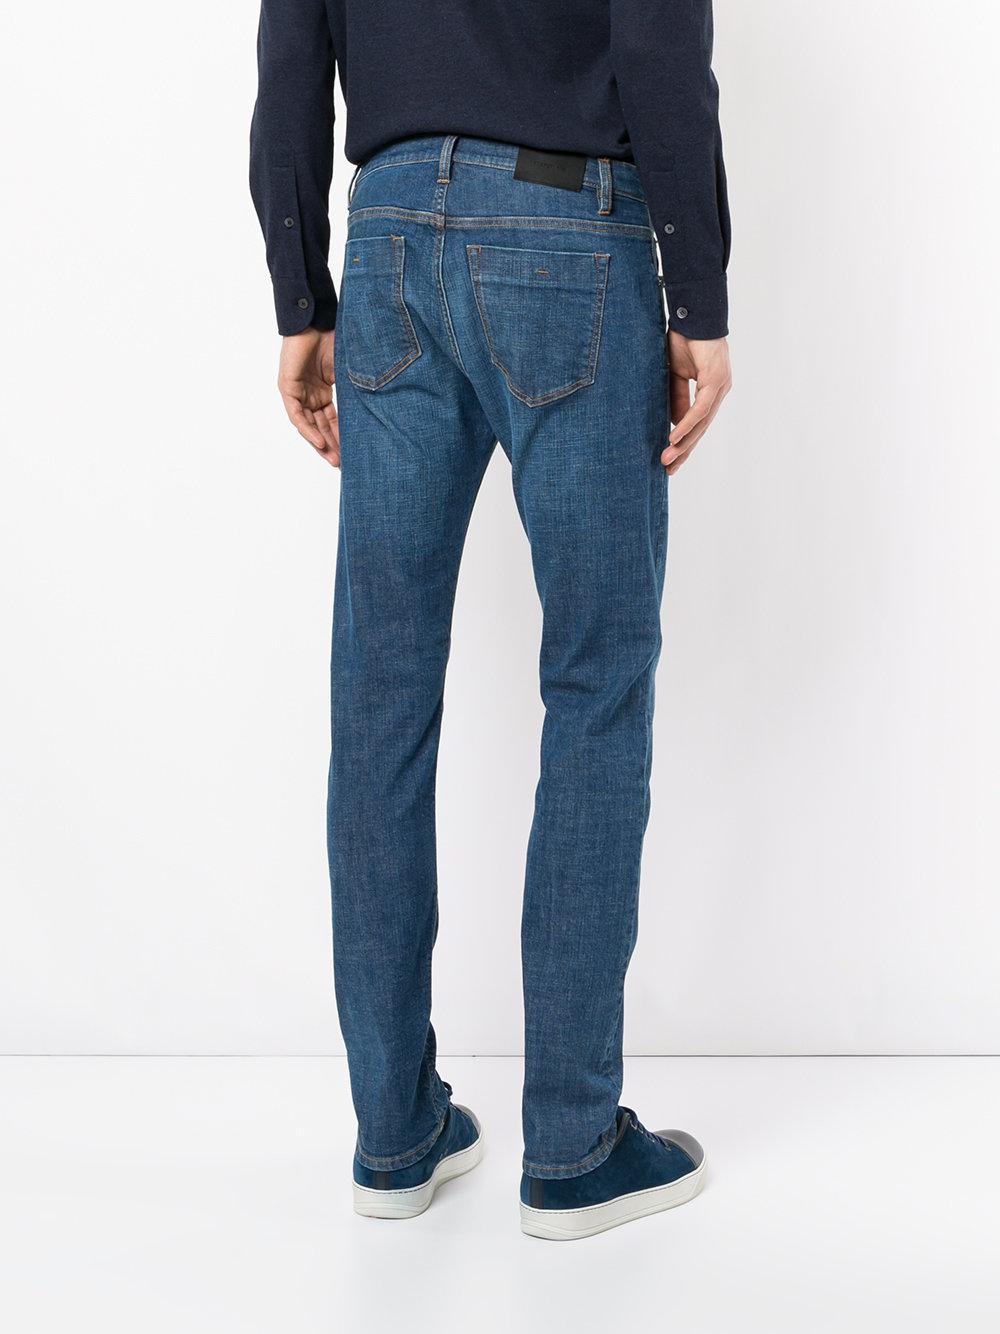 Cerruti 1881 Denim Classic Jeans in Blue for Men - Lyst